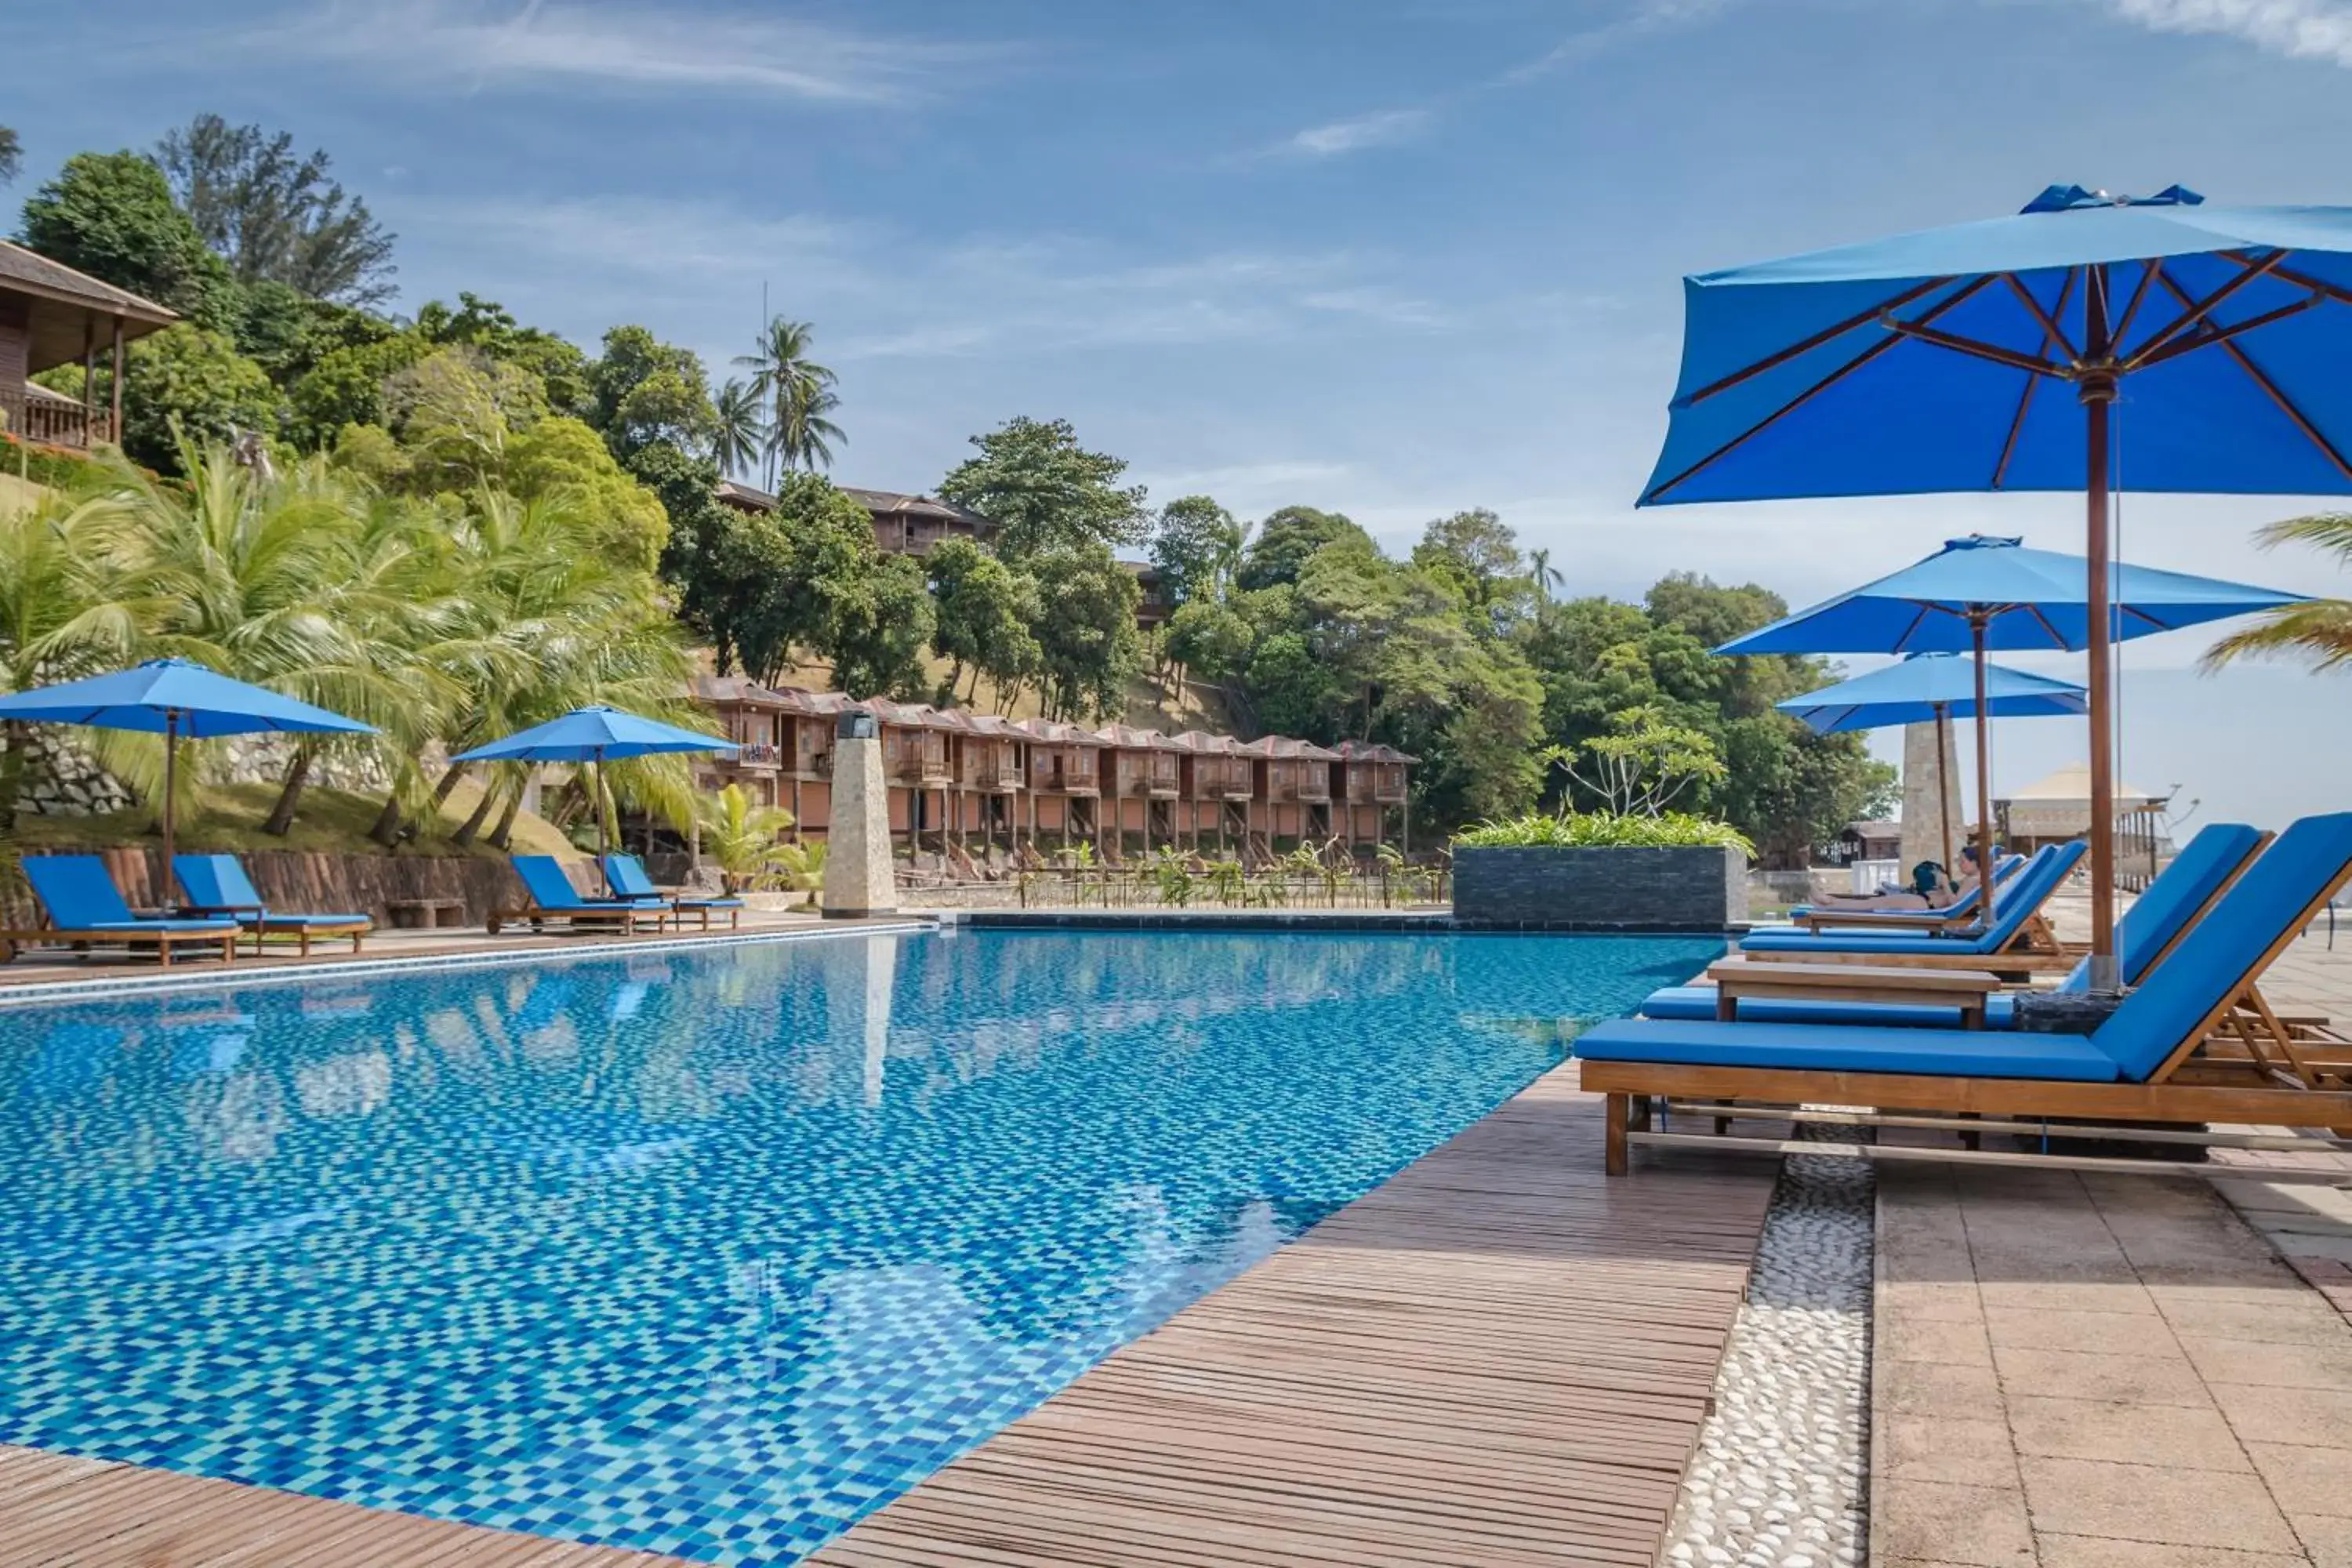 Day, Swimming Pool in KTM Resort Batam